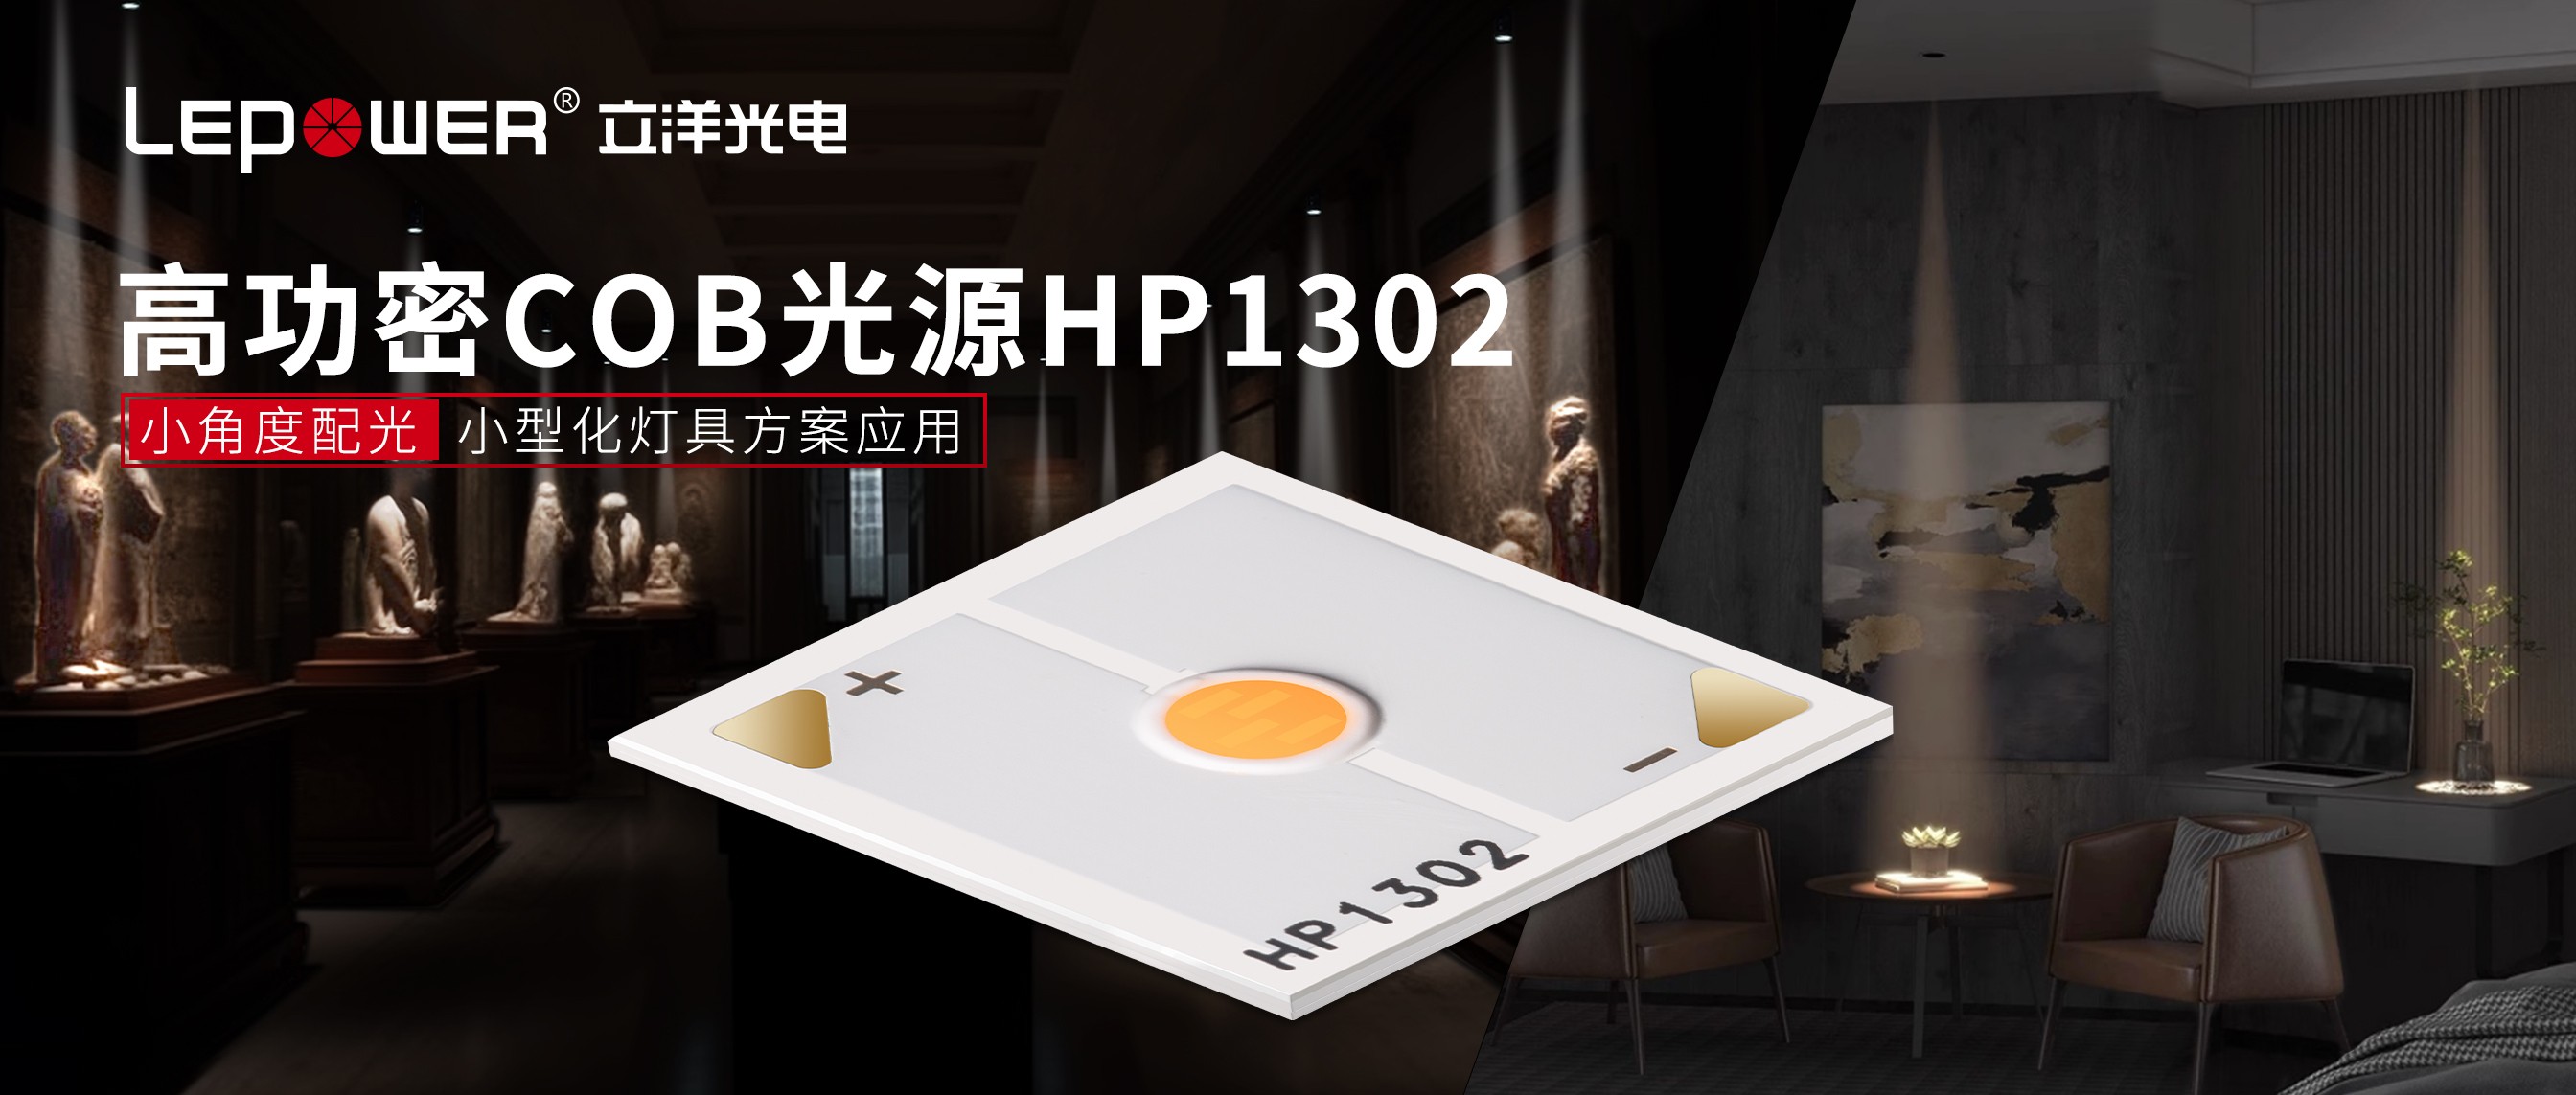 w66利来国际最给利的老牌新品 I 创新高功密COB光源1302，让你的空间焕发独特光彩！